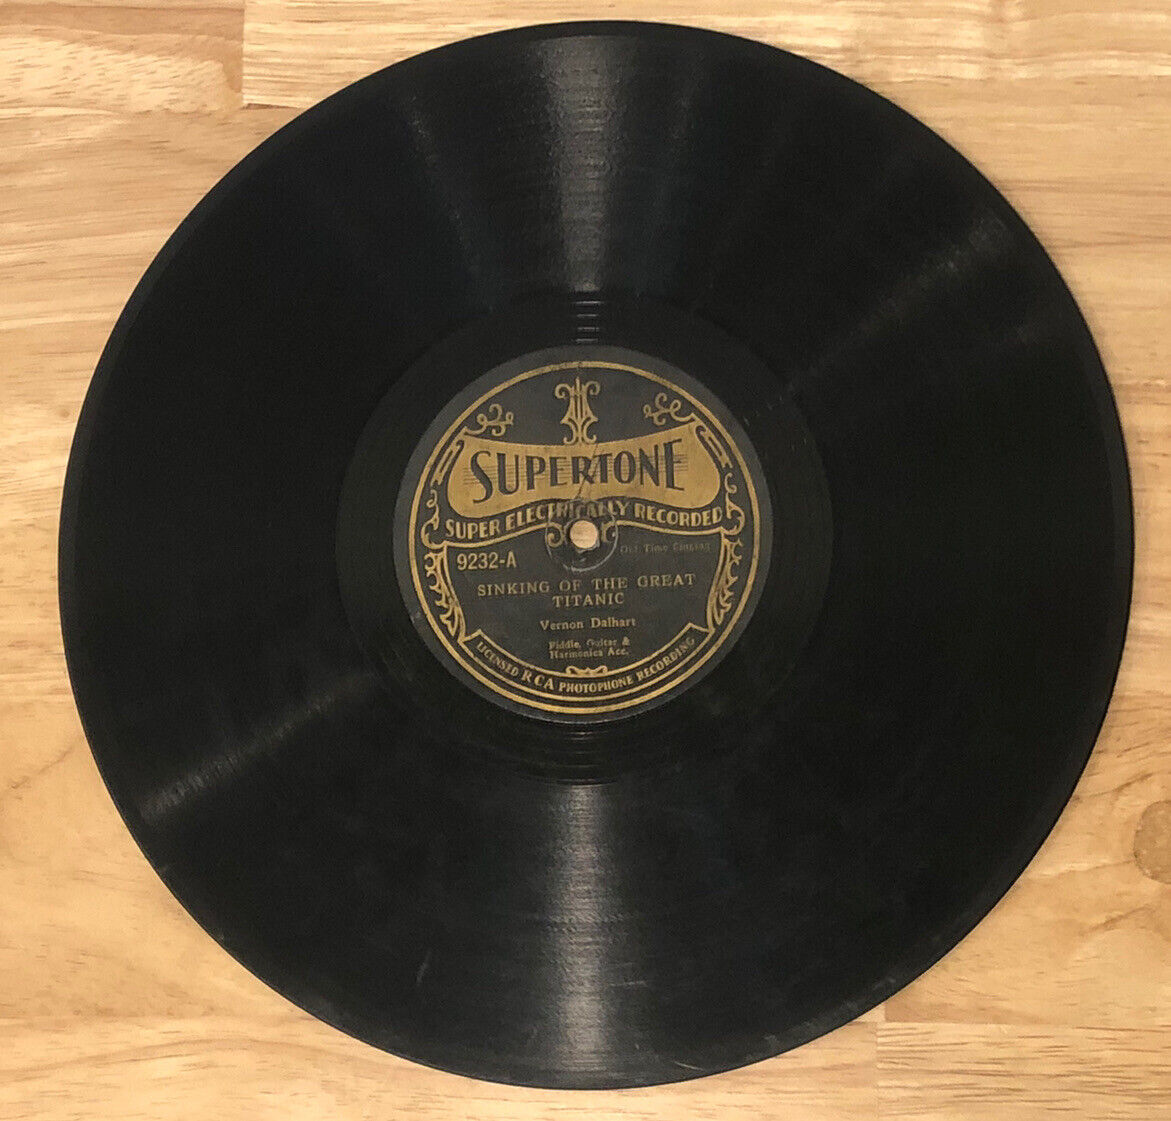 RARE VINTAGE ANTIQUE SUPERTONE 9232 SINKING OF THE GREAT TITANIC 78 RPM RECORD